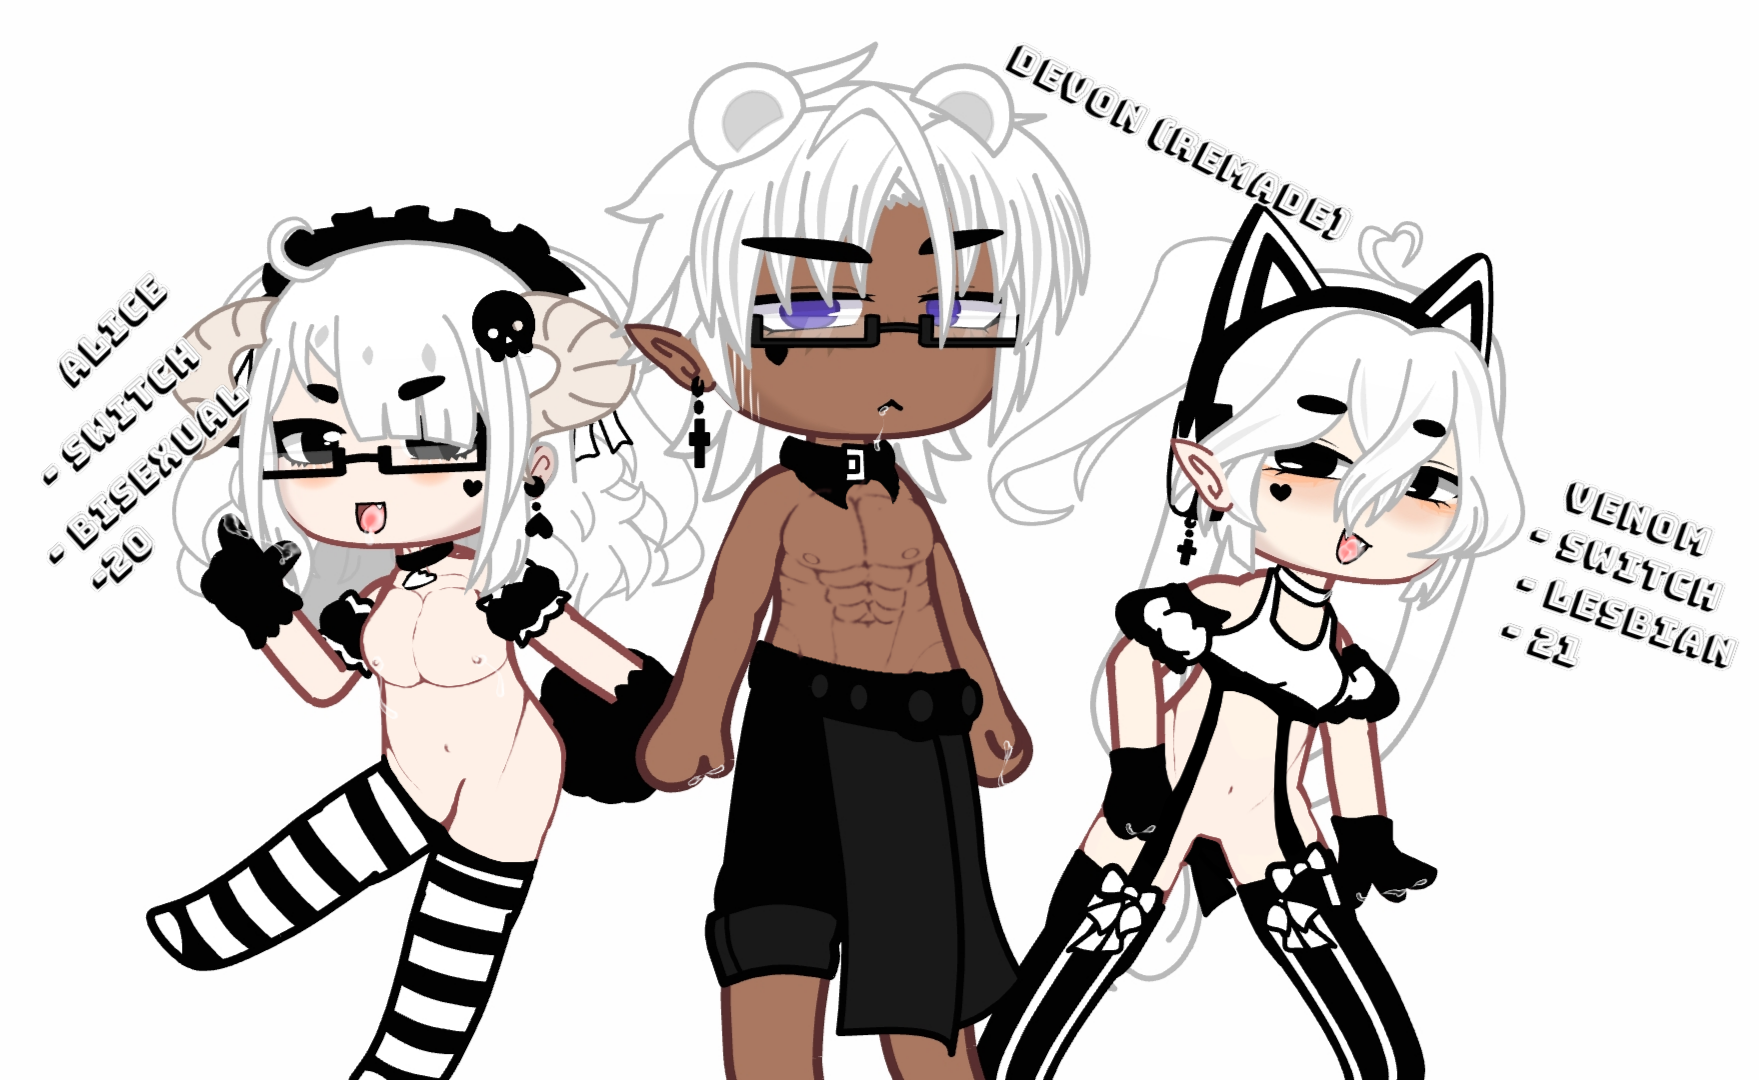 Alice, Devon and Venom